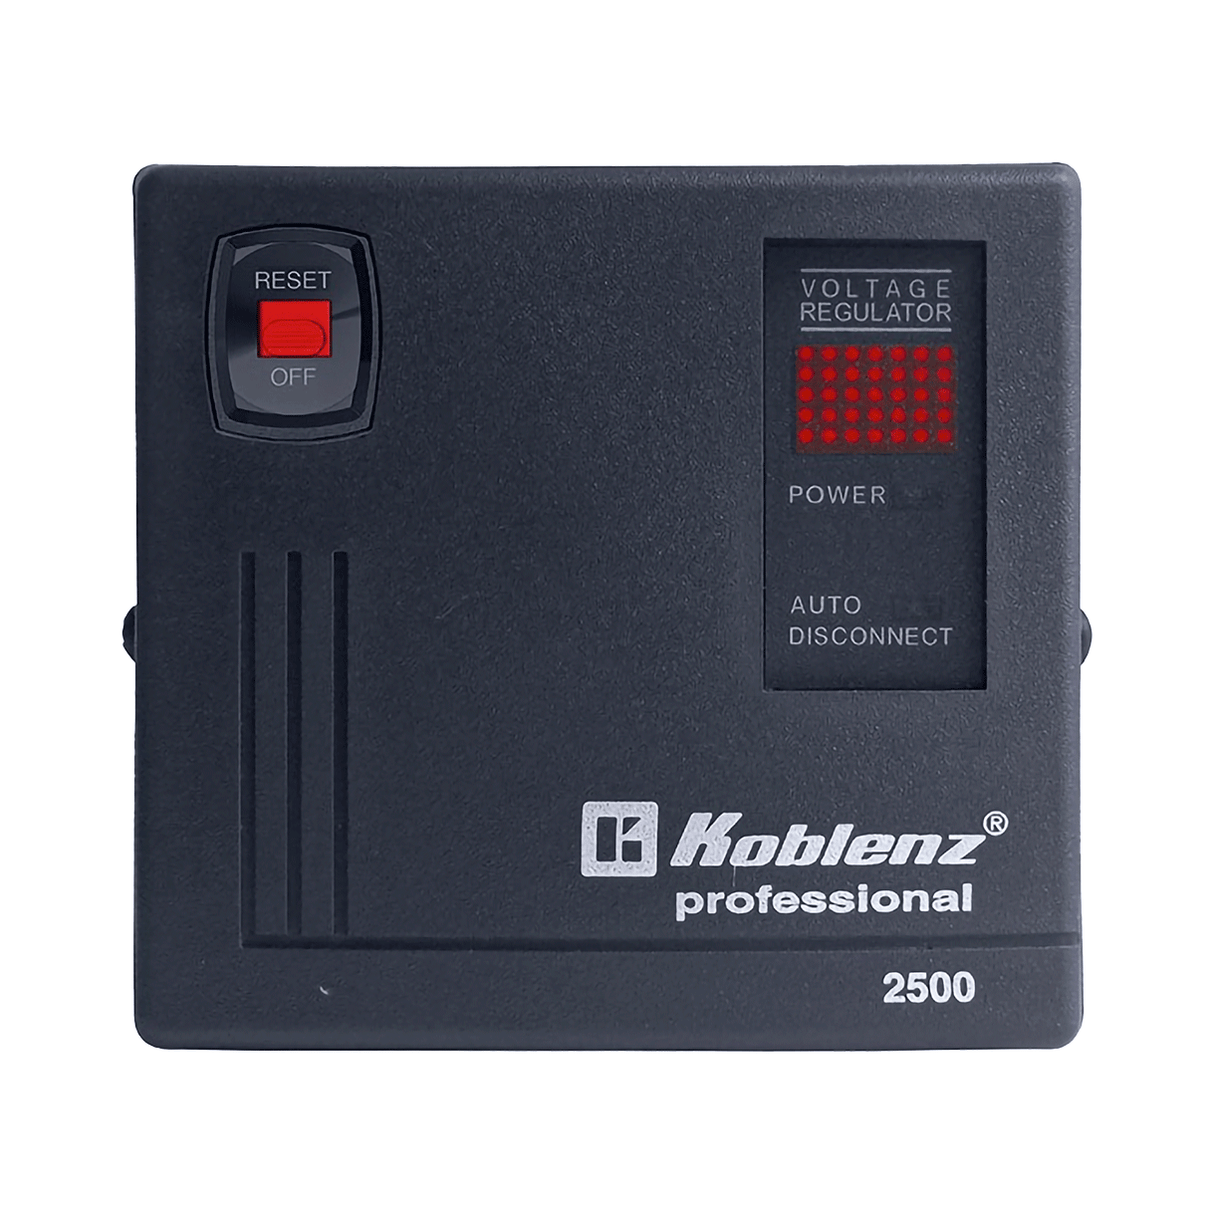 Regulador Koblenz ER-2550 6 Contactos